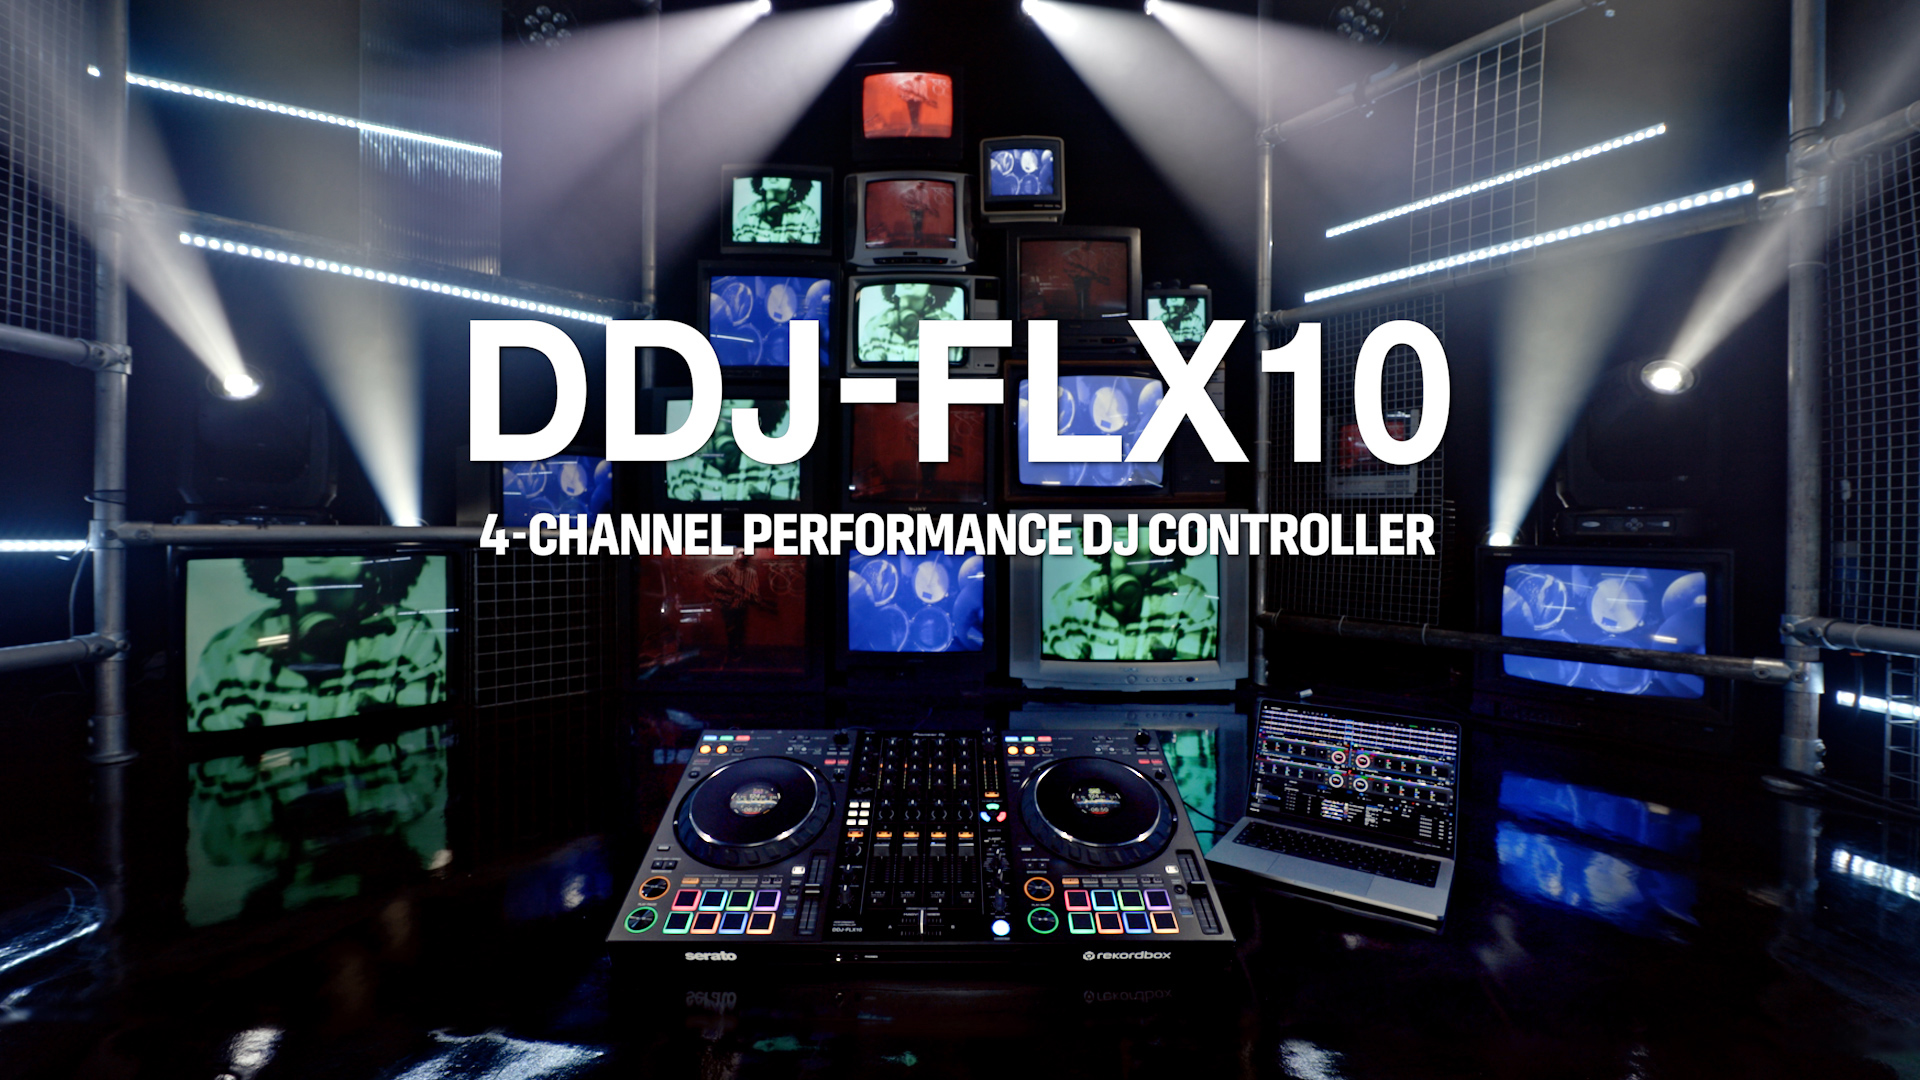 DDJ-FLX10 4-Channel DJ Controller by Pioneer DJ